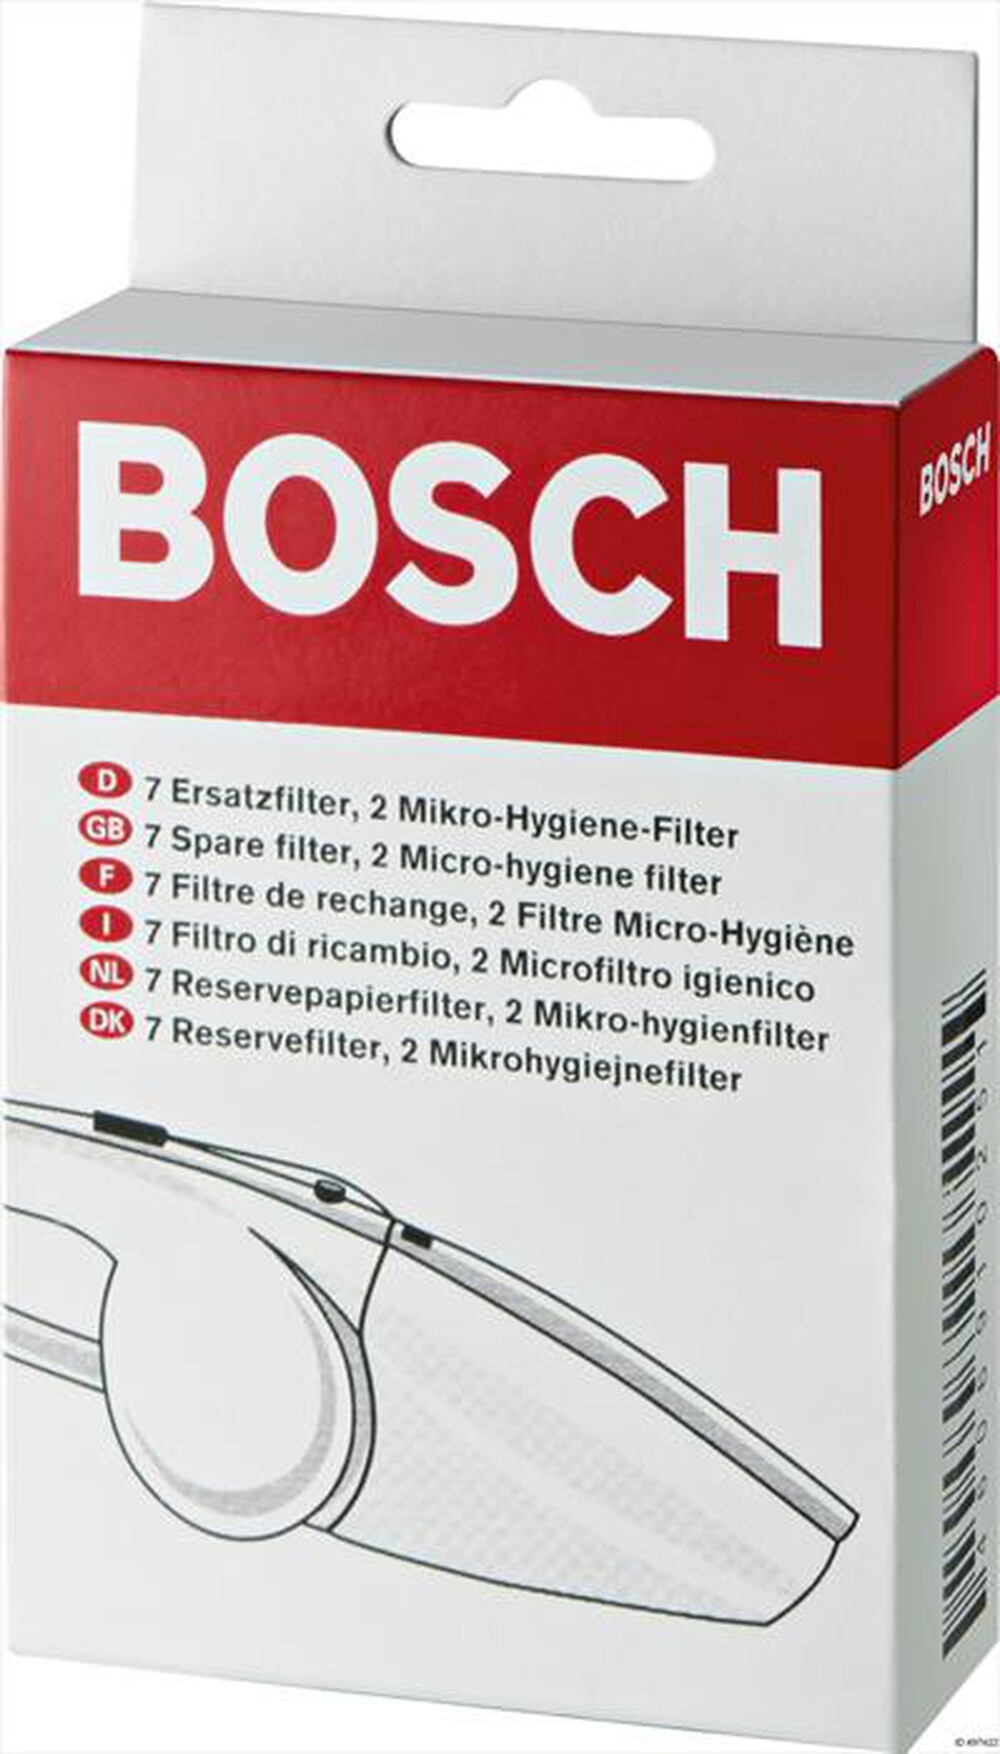 "BOSCH - BBZ 41 FK"